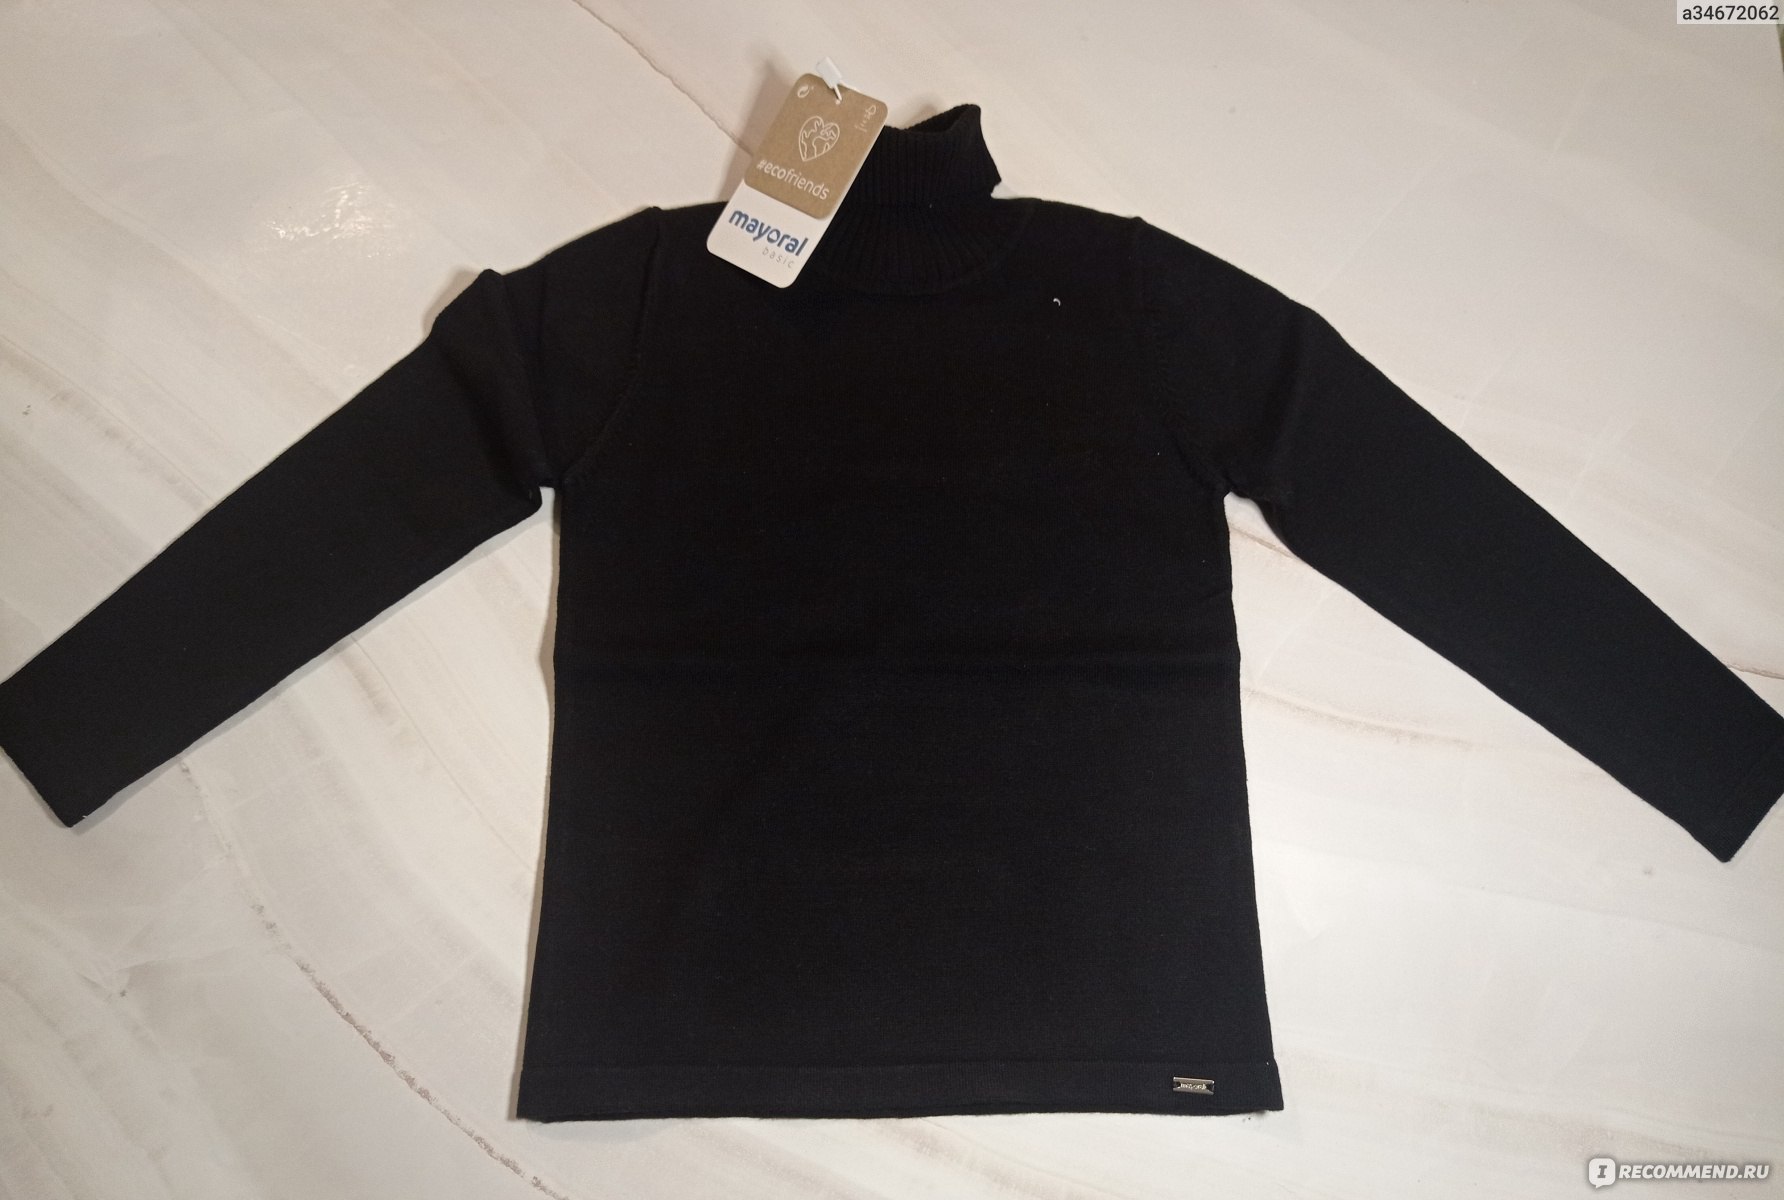 Свитер MAYORAL Turtleneck Sweater Black, артикул 782816_61 : шведский бебишоп ком 